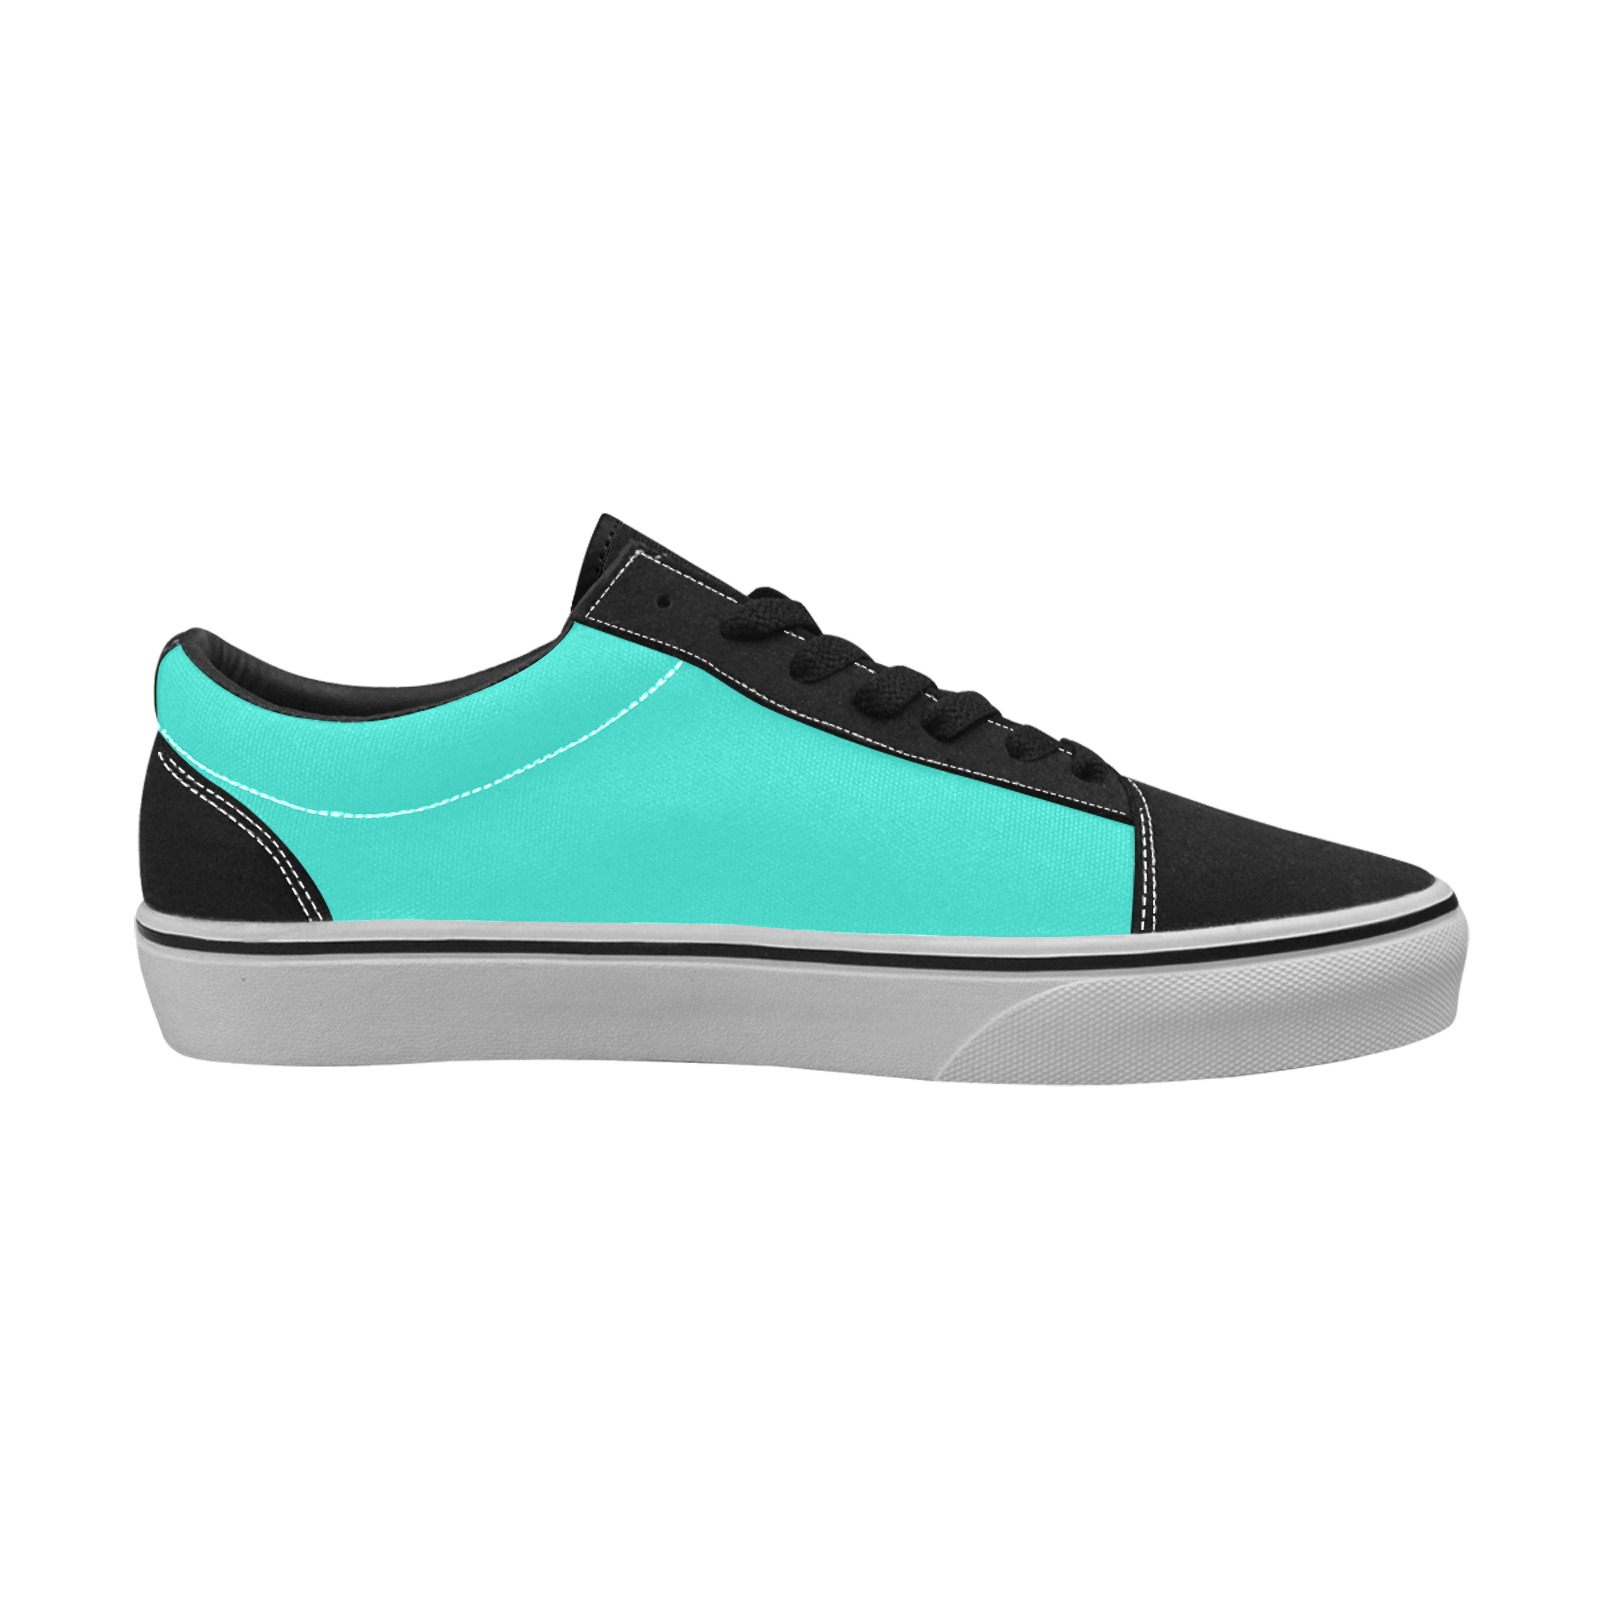 color turquoise Men's Low Top Skateboarding Shoes (Model E001-2)